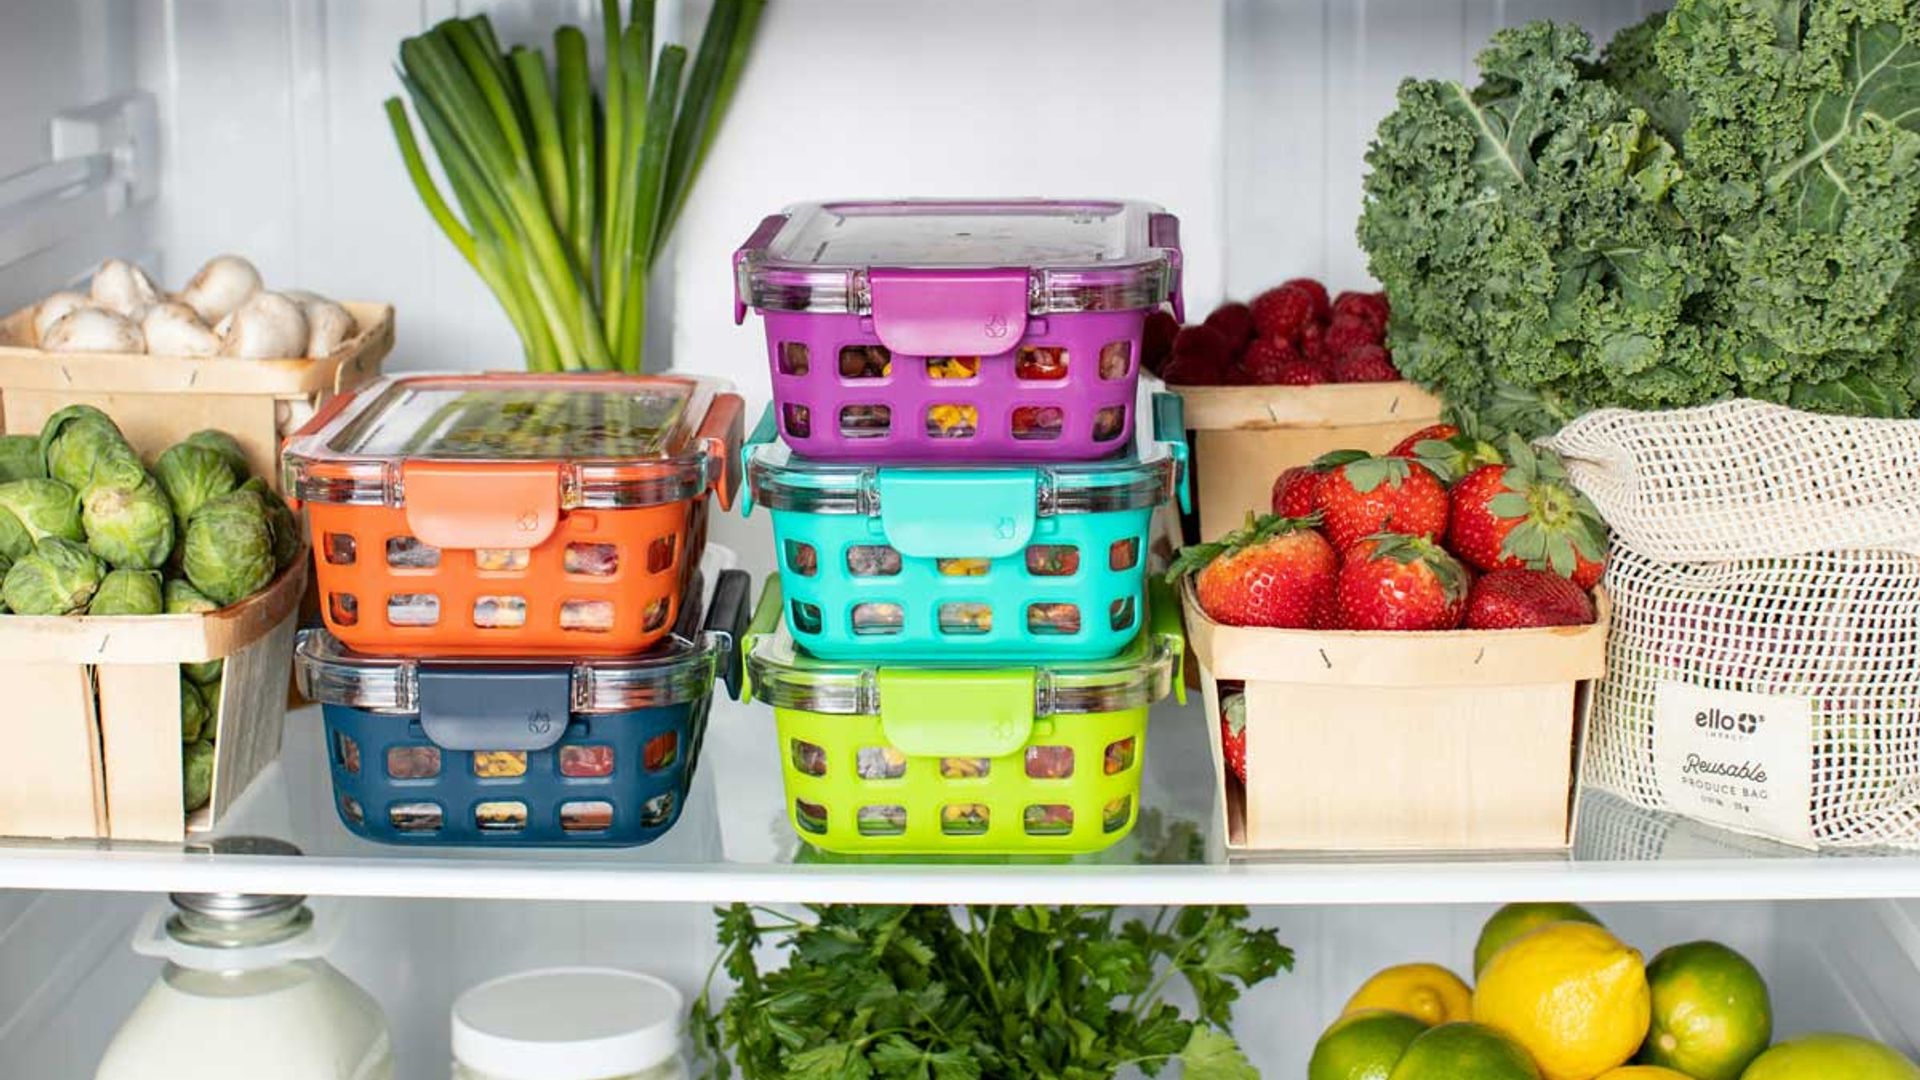 Food storage product keeps produce fresher for 80% longer